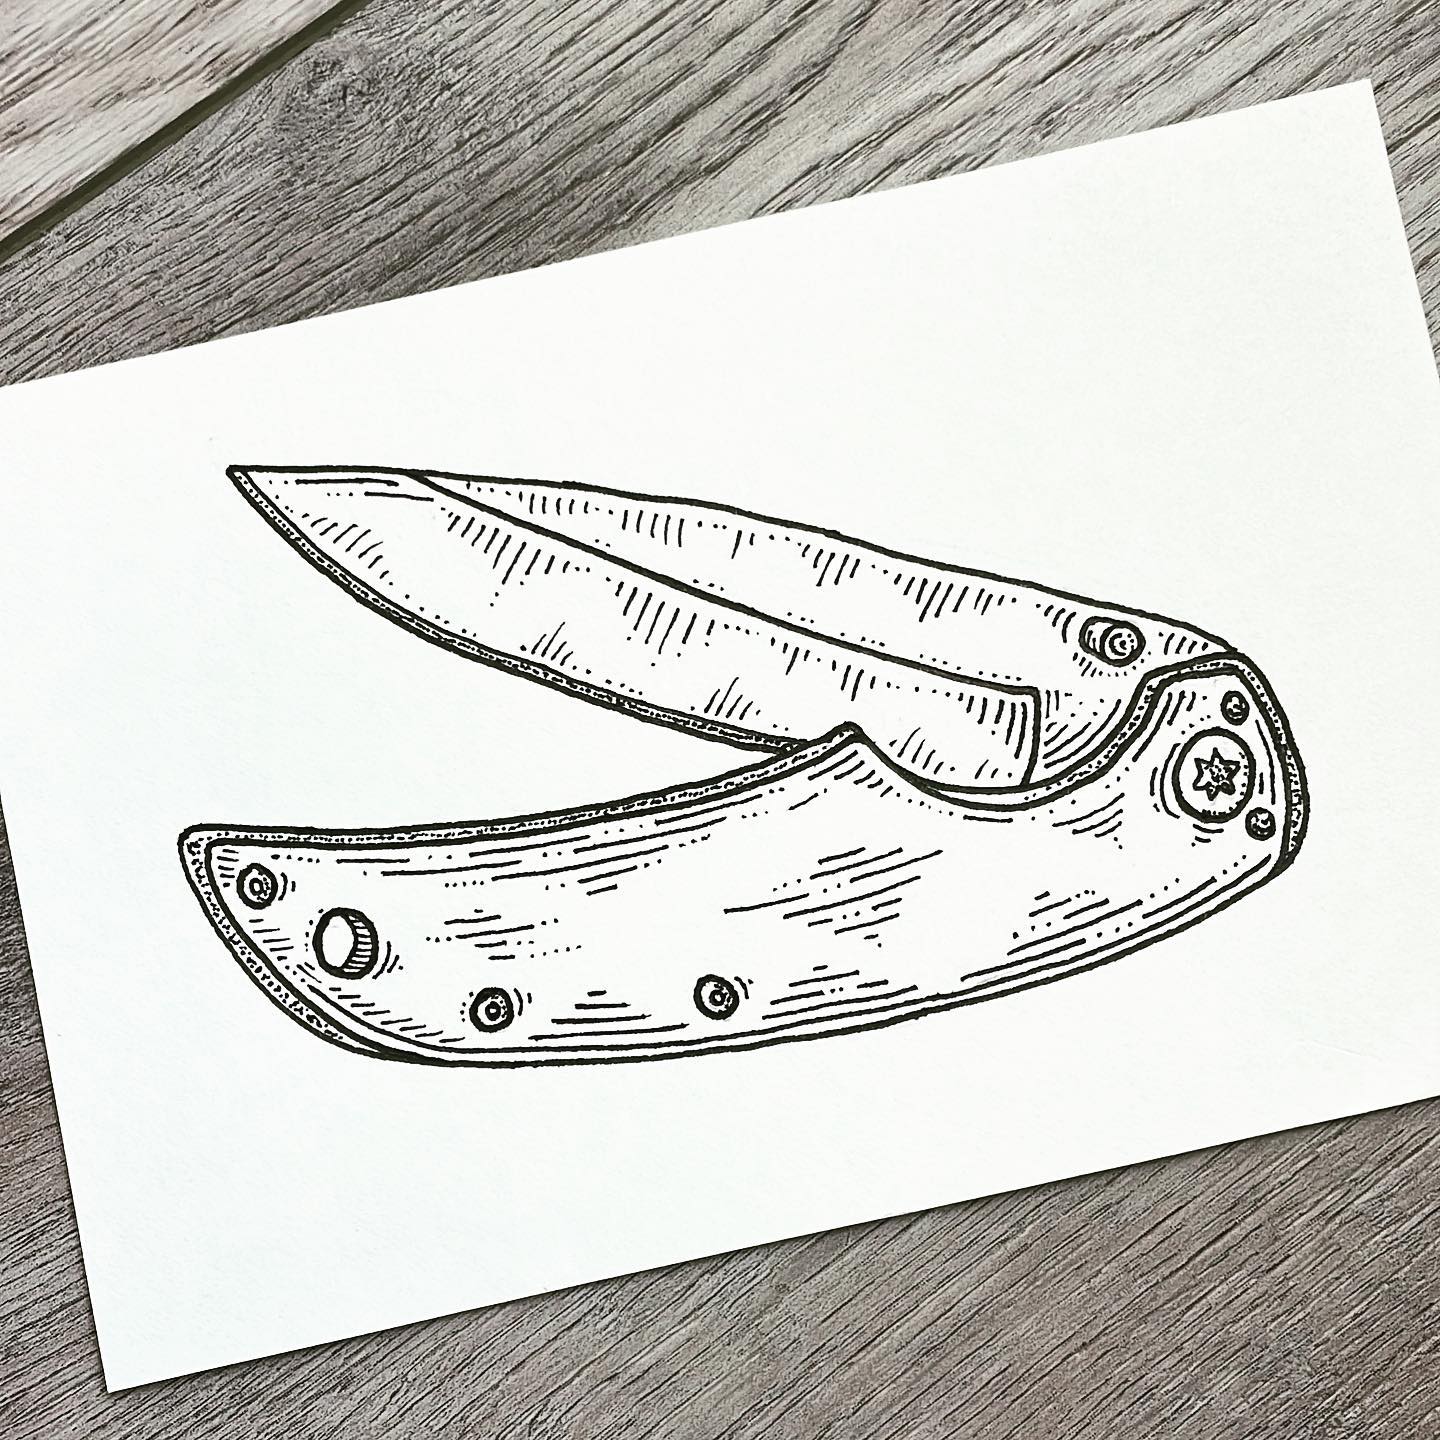 Drawing a Pocket Knife